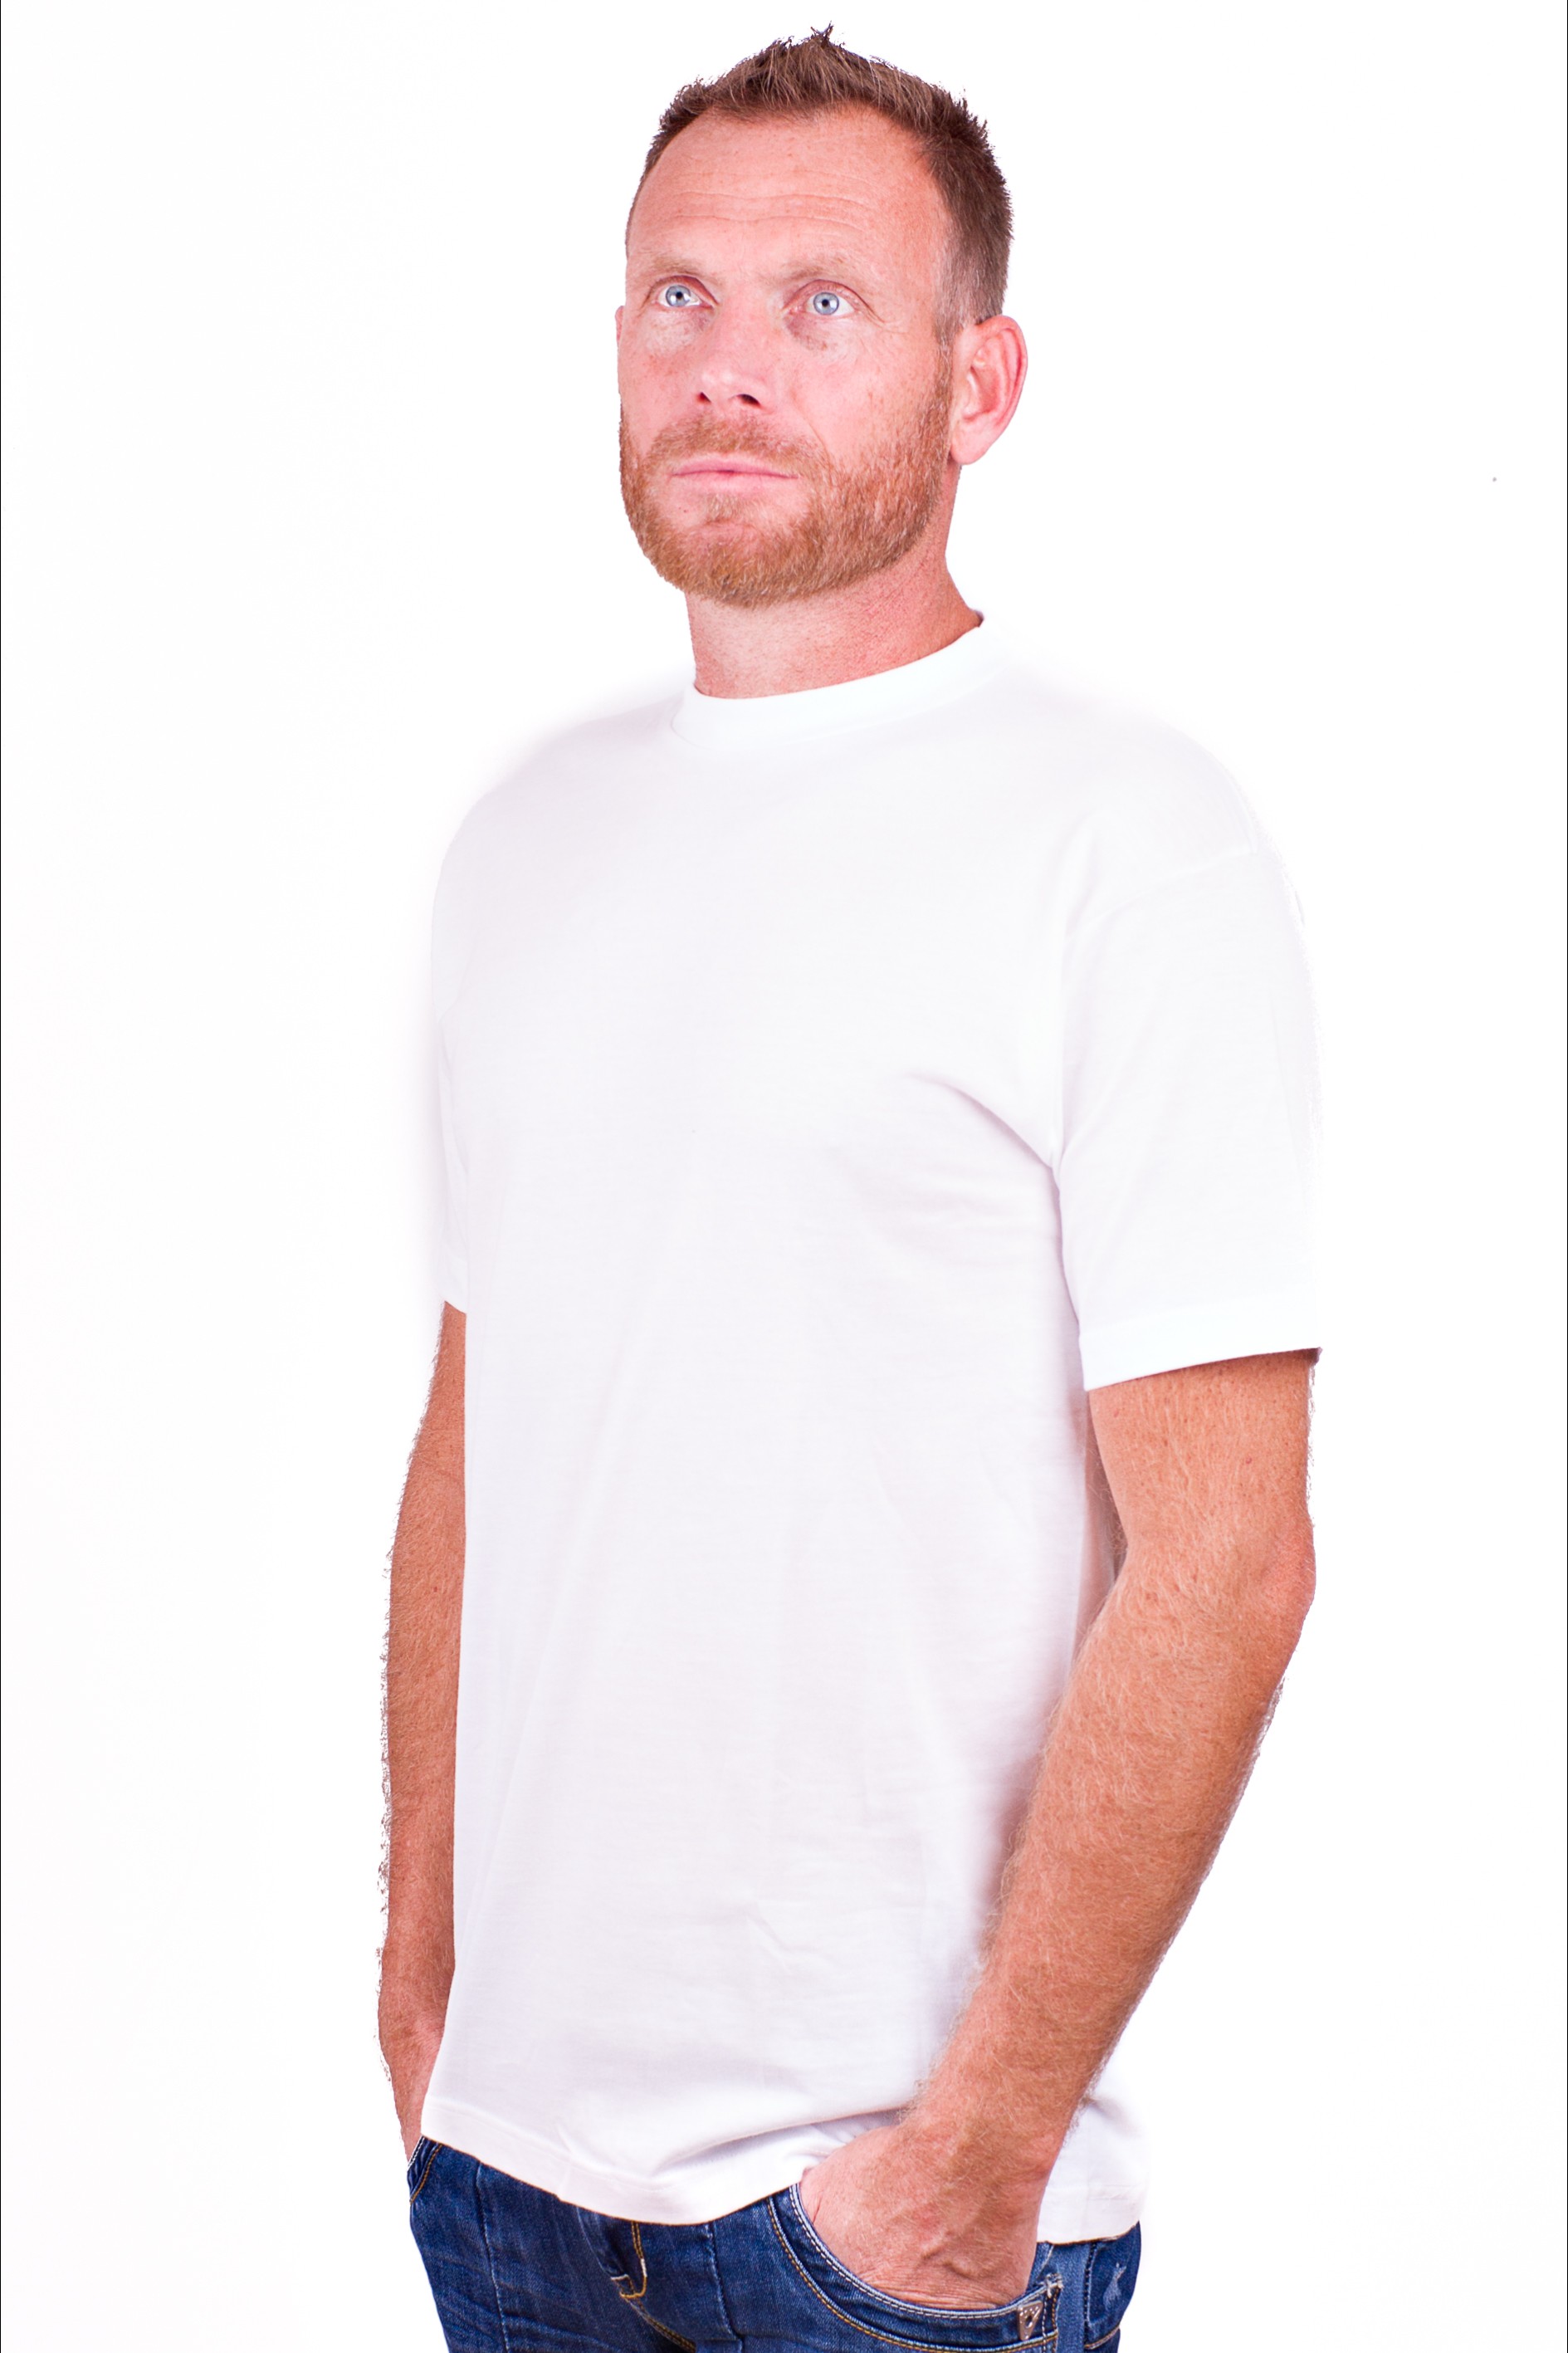 zeemijl Integreren Perceptie Alan Red T-Shirt Virginia White ( extra long) ( two - pack )